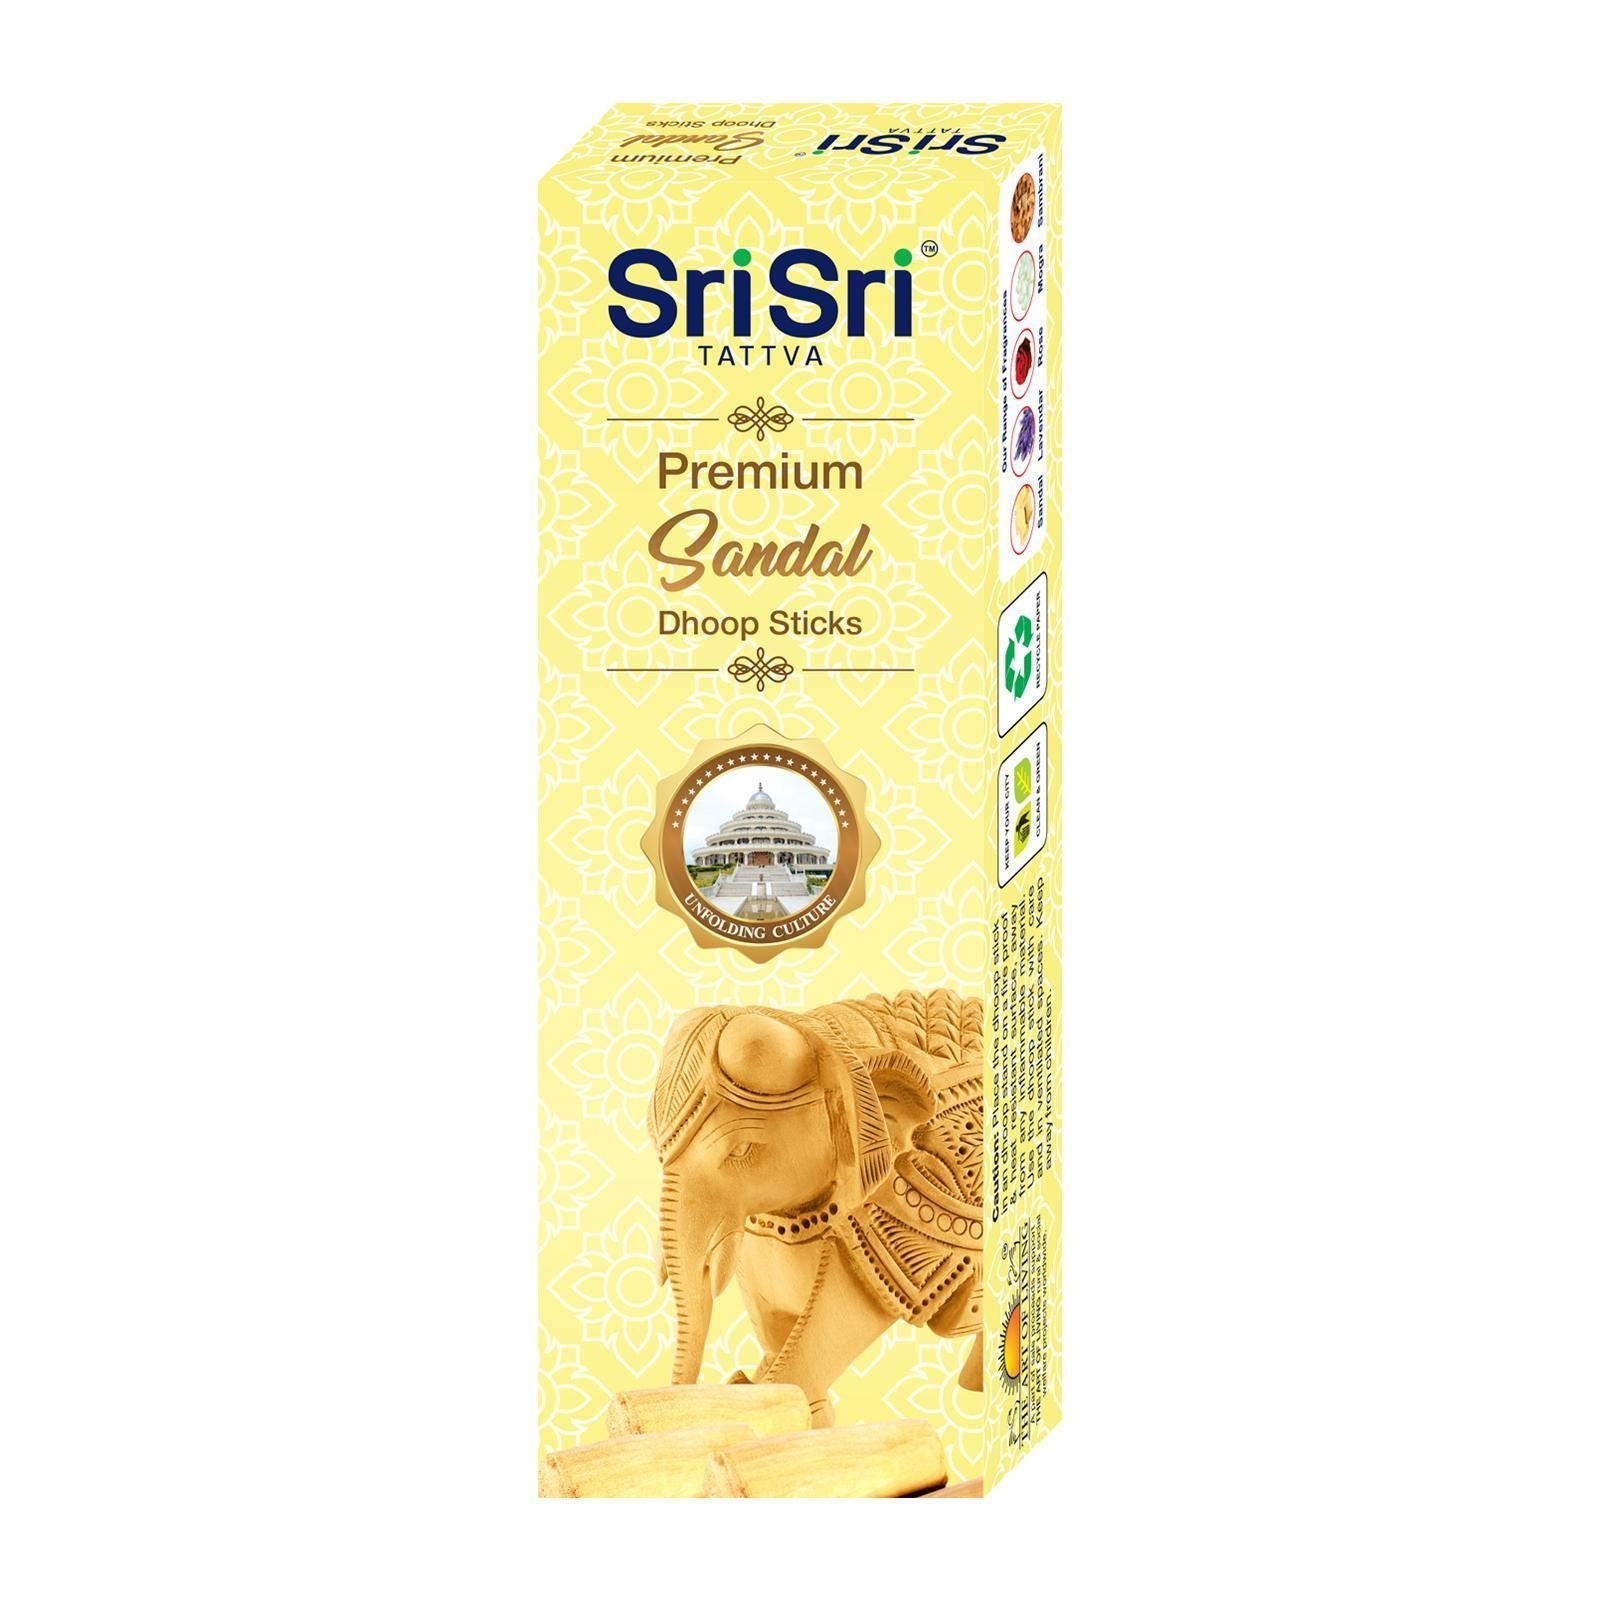 Sri Sri Tattva Premium Sandal Dhoop Sticks